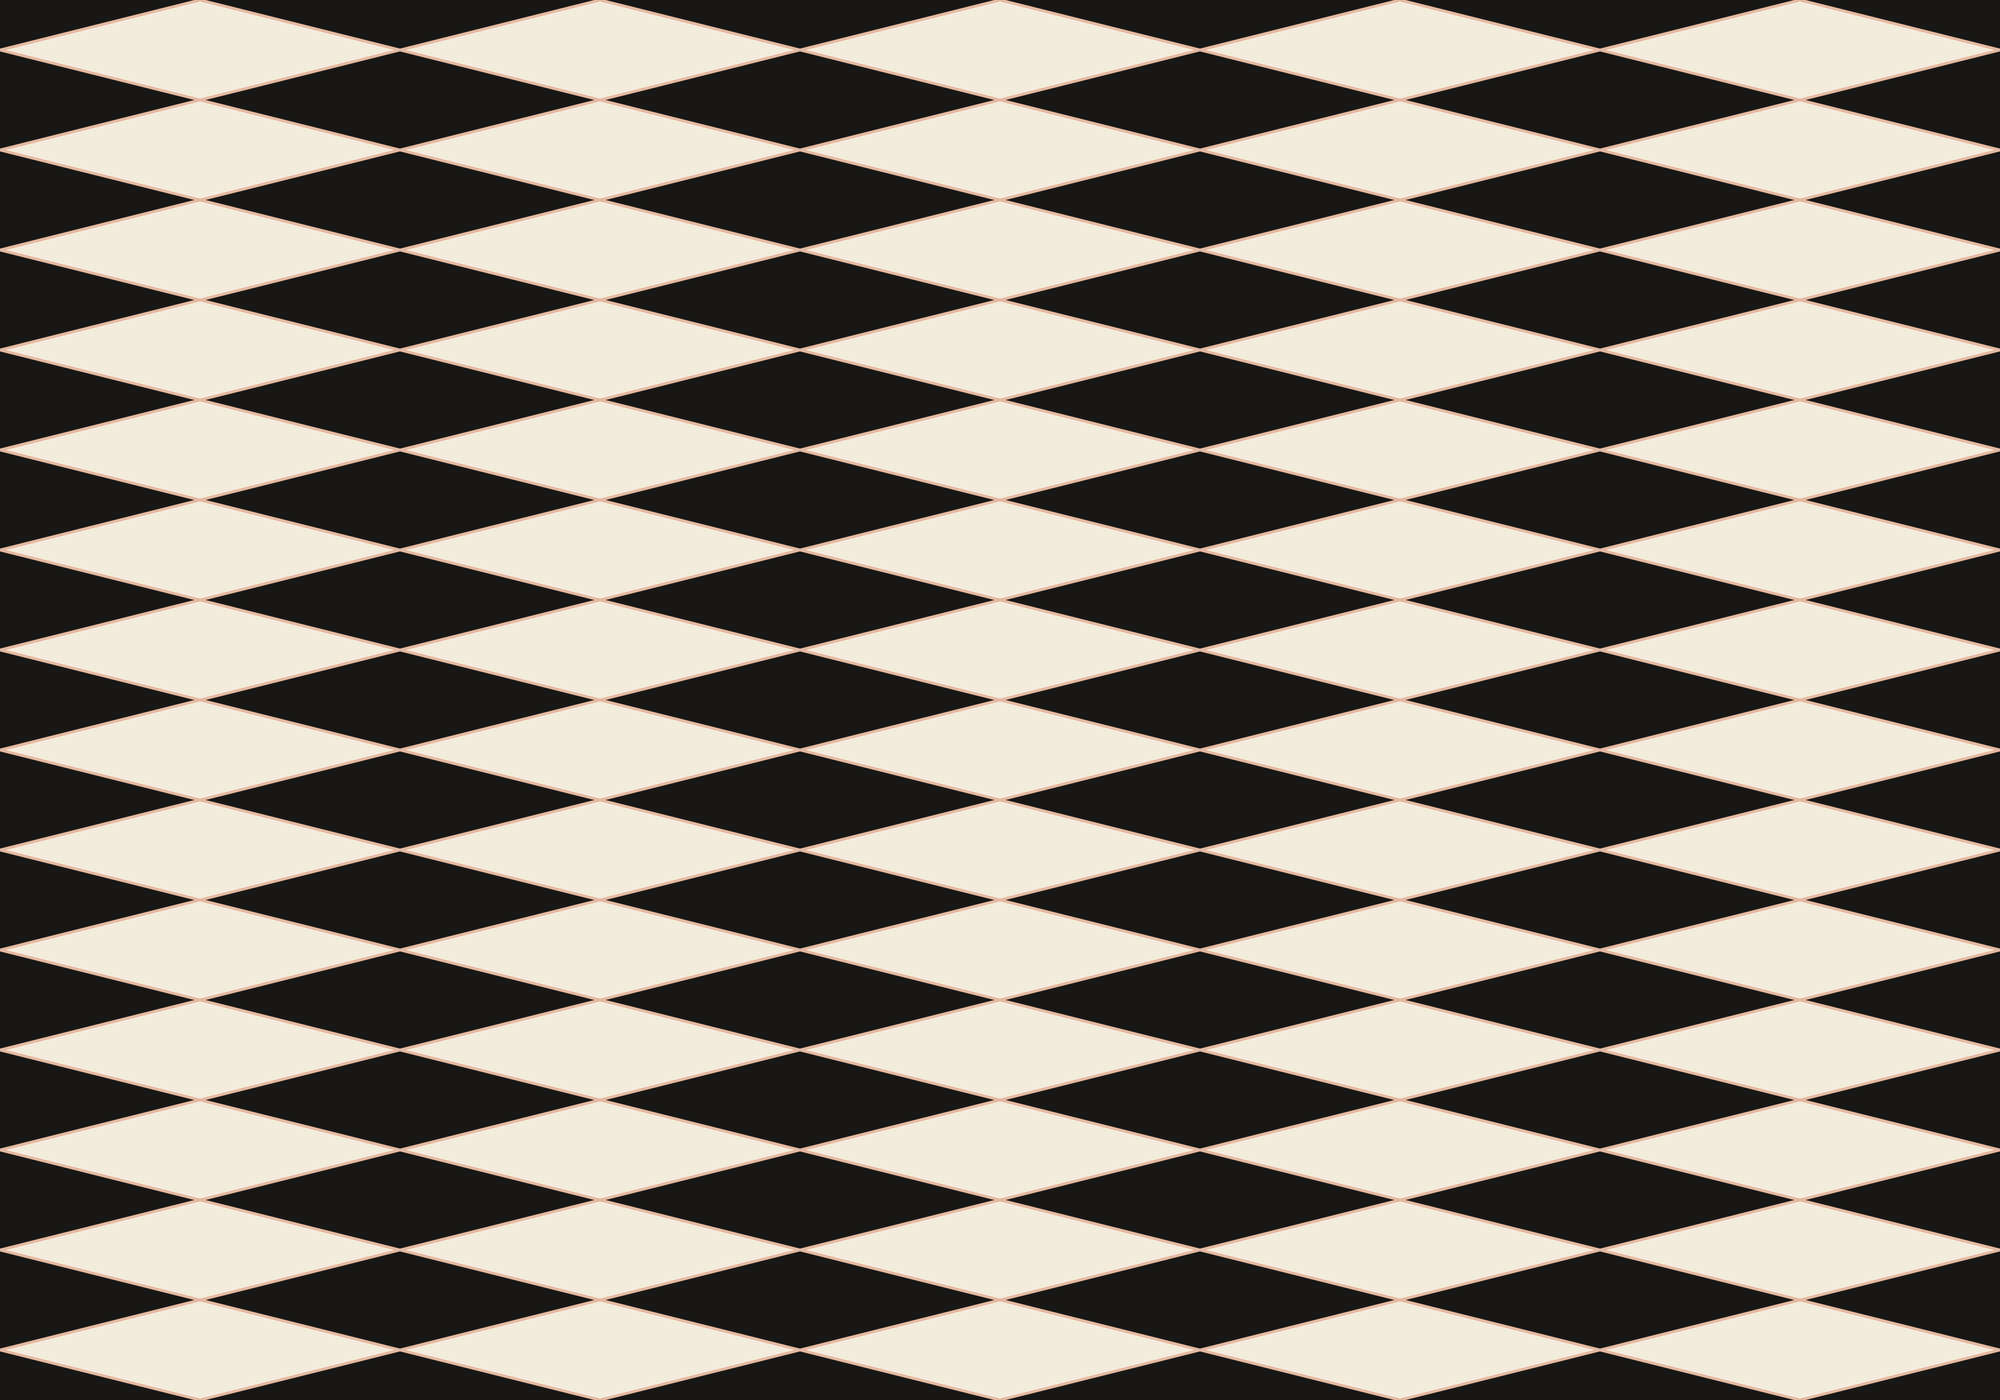             Photo wallpaper Retro with diamond pattern graphic - Black, Cream, Peach | Matt smooth fleece
        